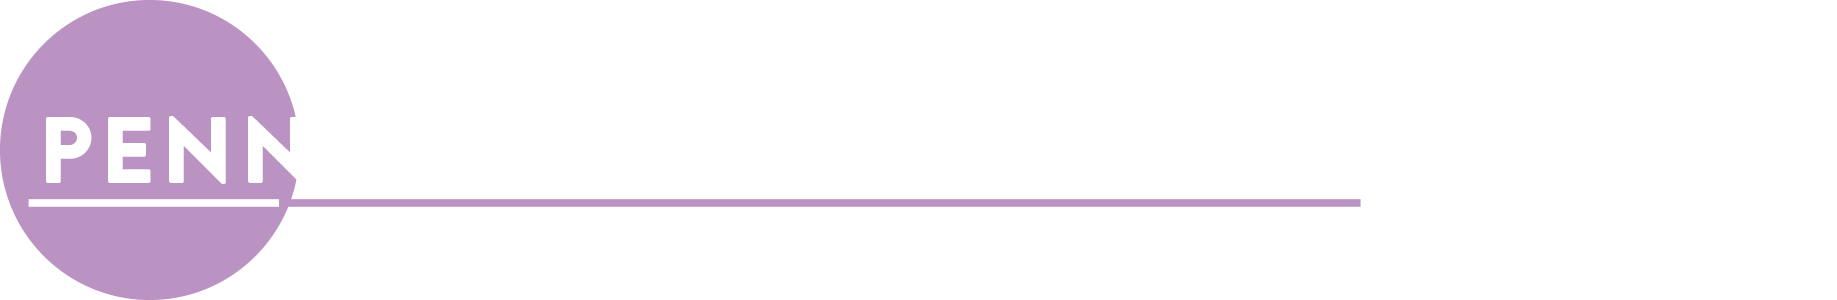 Penn Carey Law Profile title